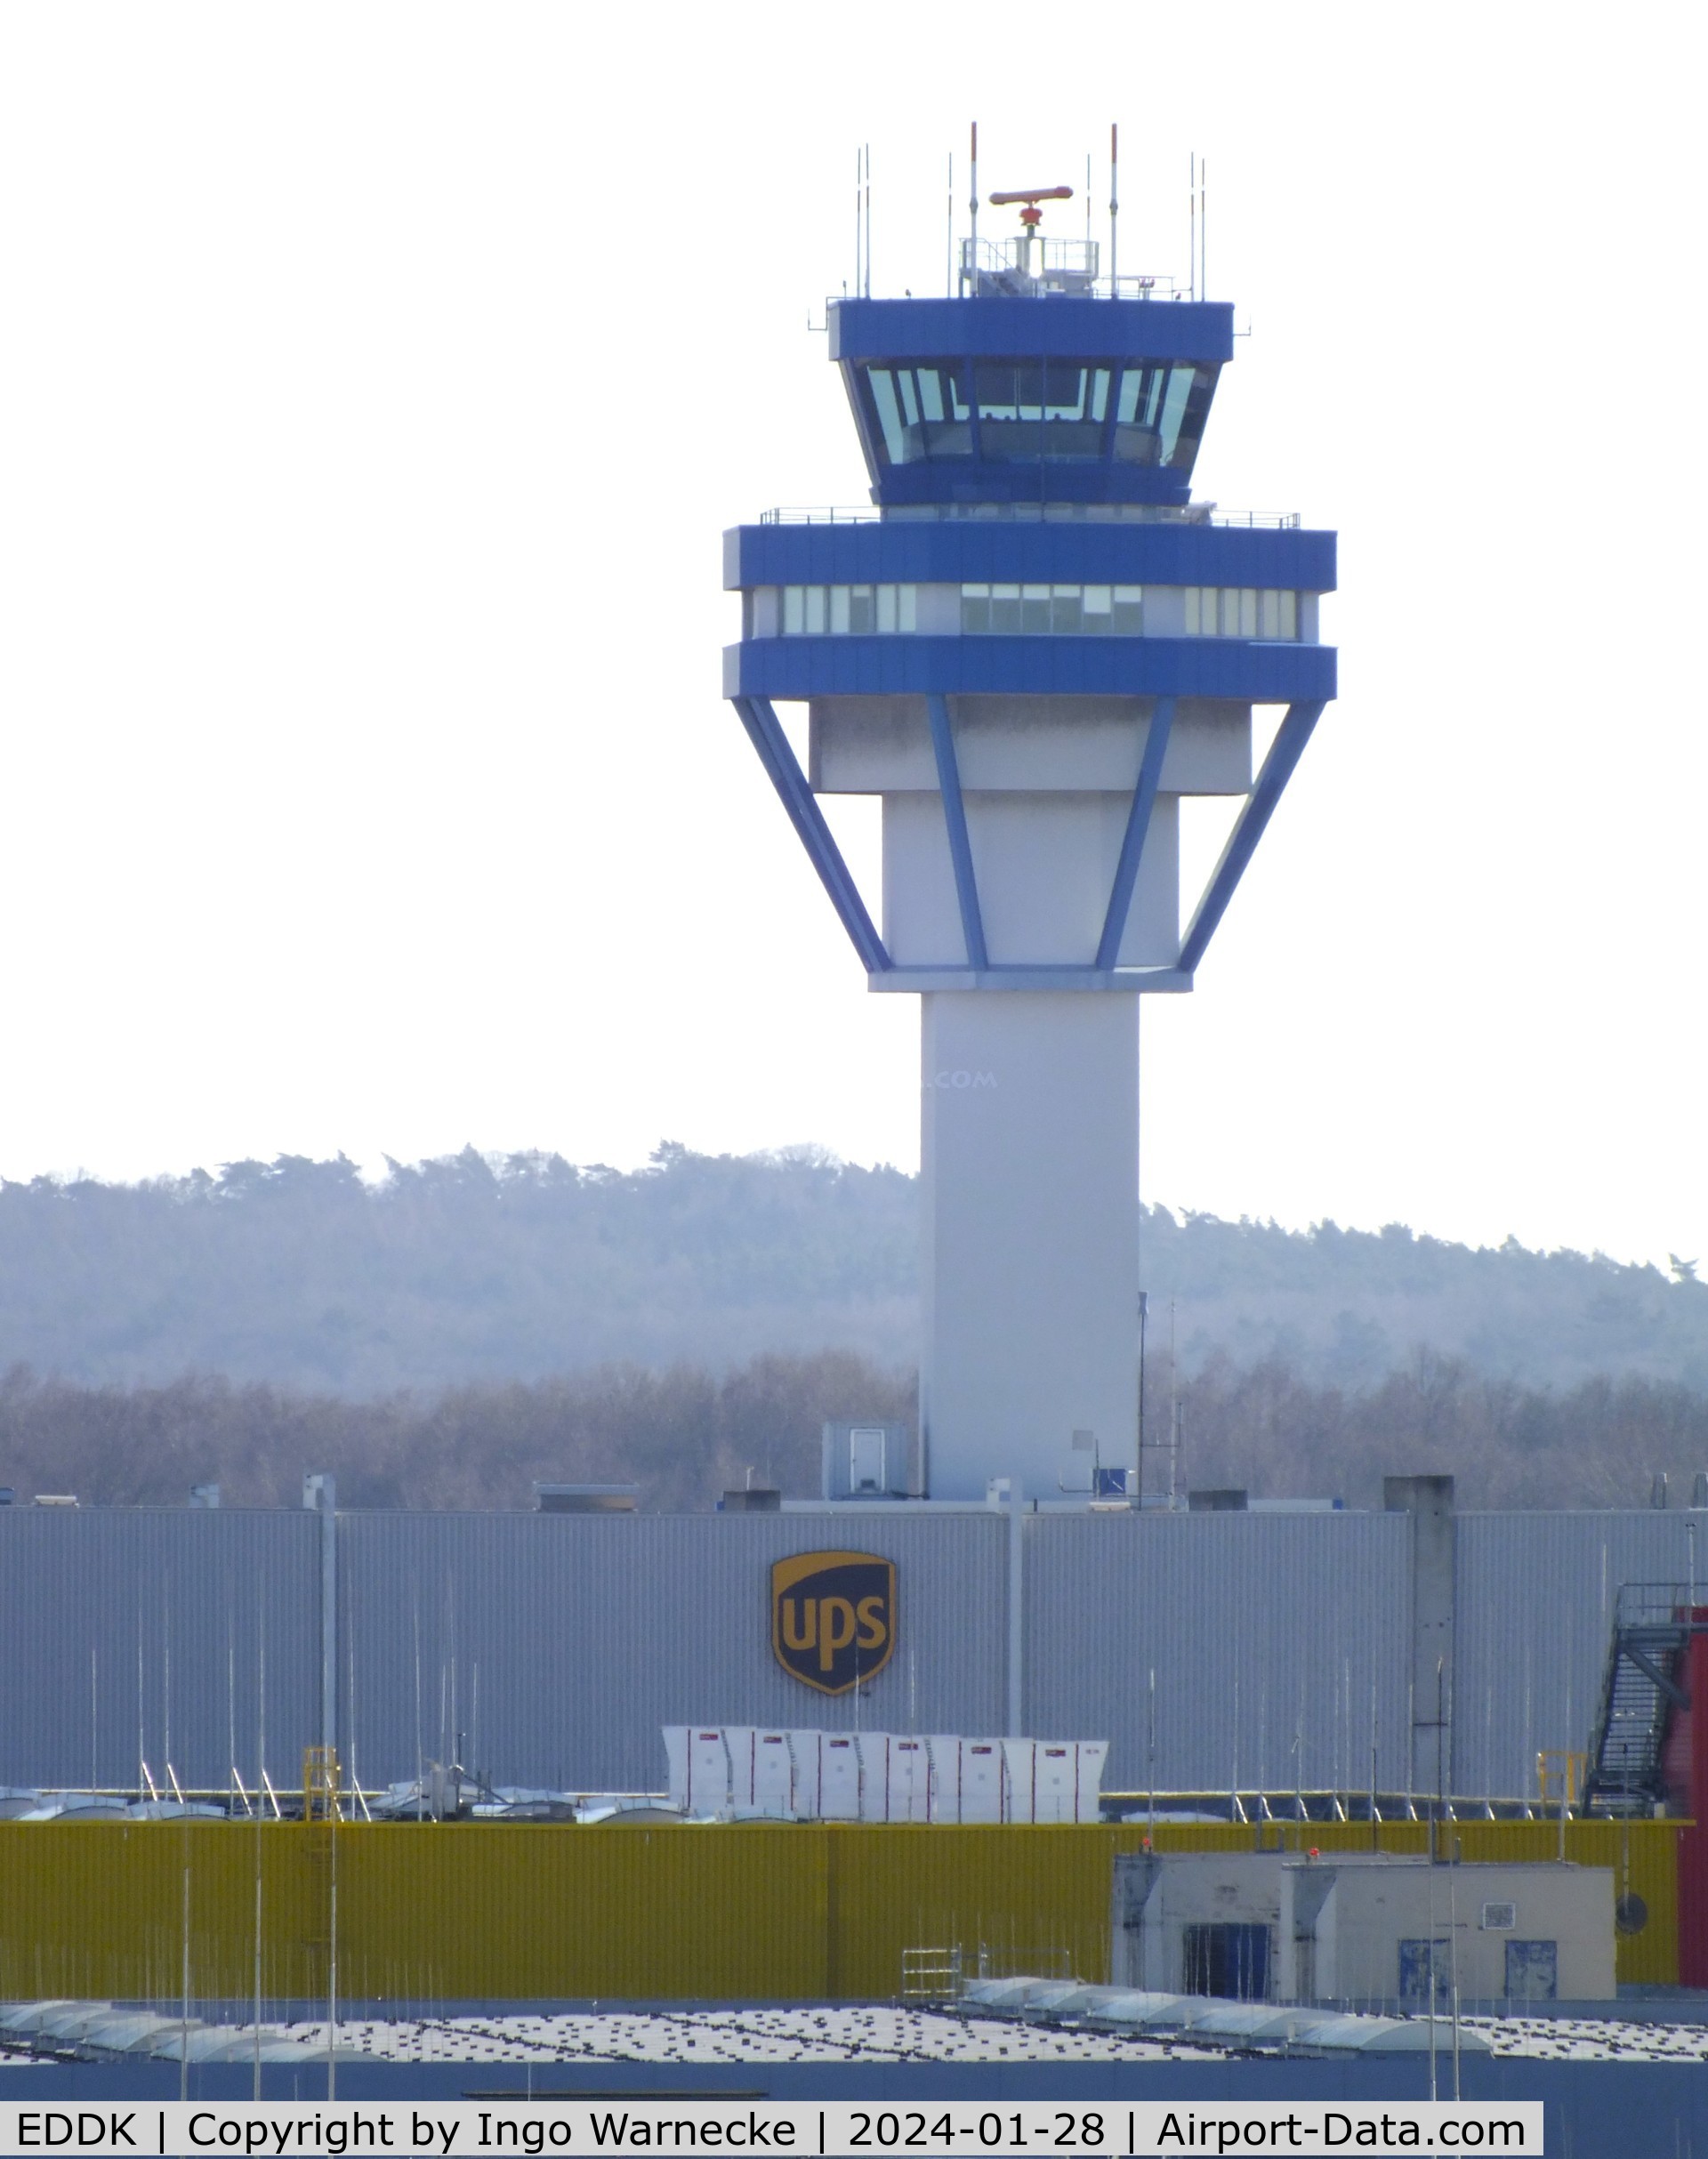 Cologne Bonn Airport, Cologne/Bonn Germany (EDDK) - the tower at Köln/Bonn airport